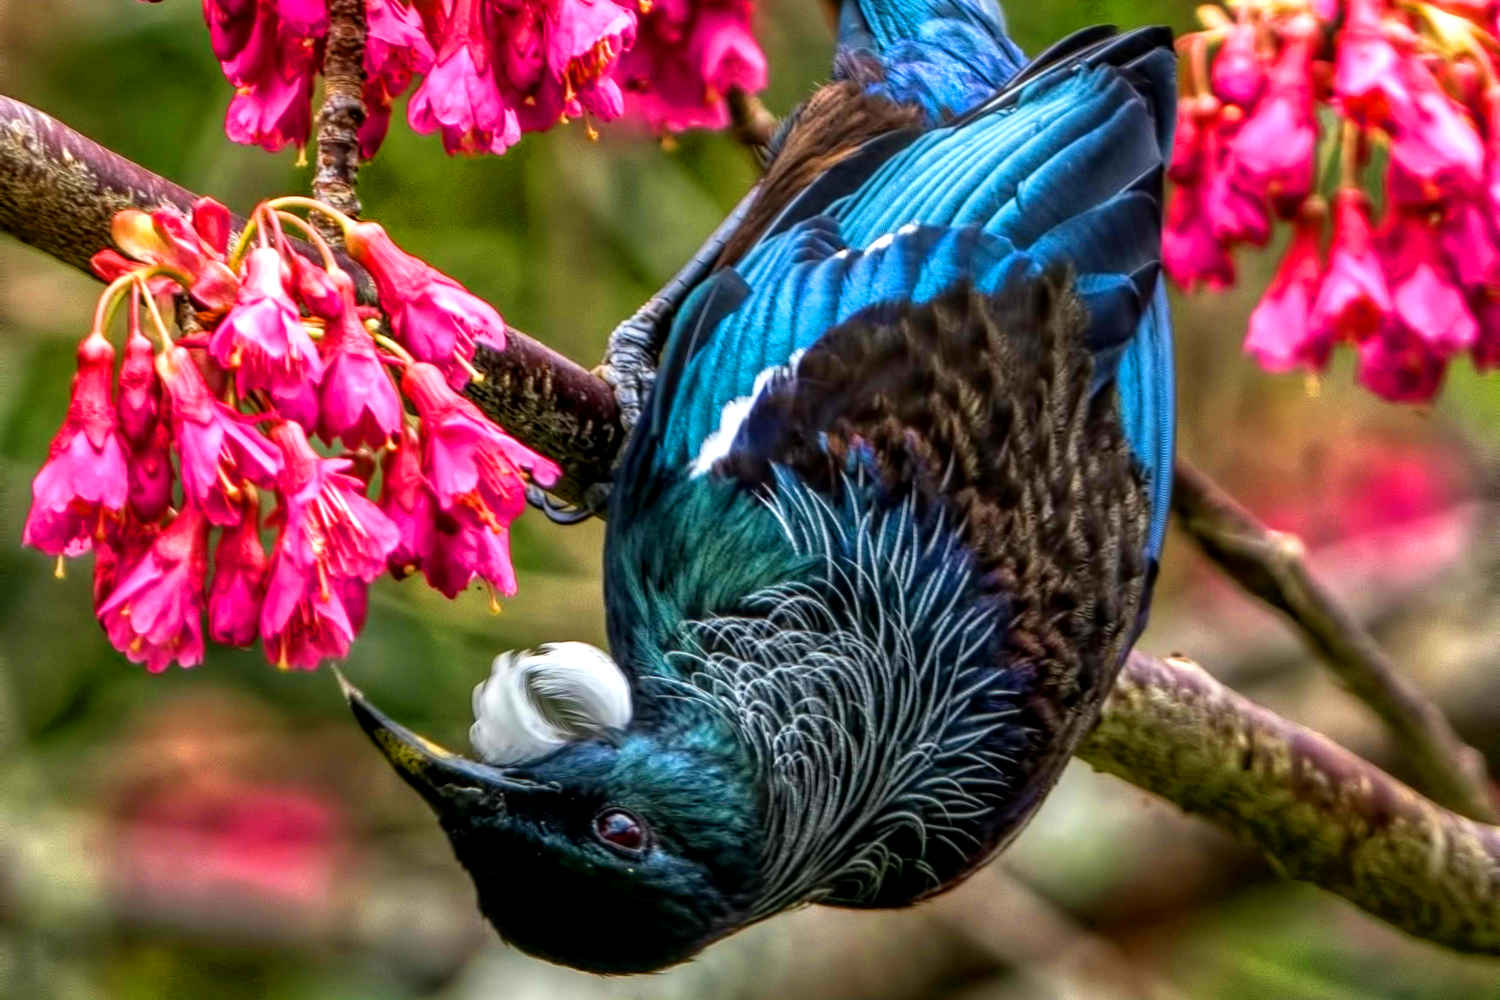 Tui (native bird) feeding on spring blossom nectar, New Zealand